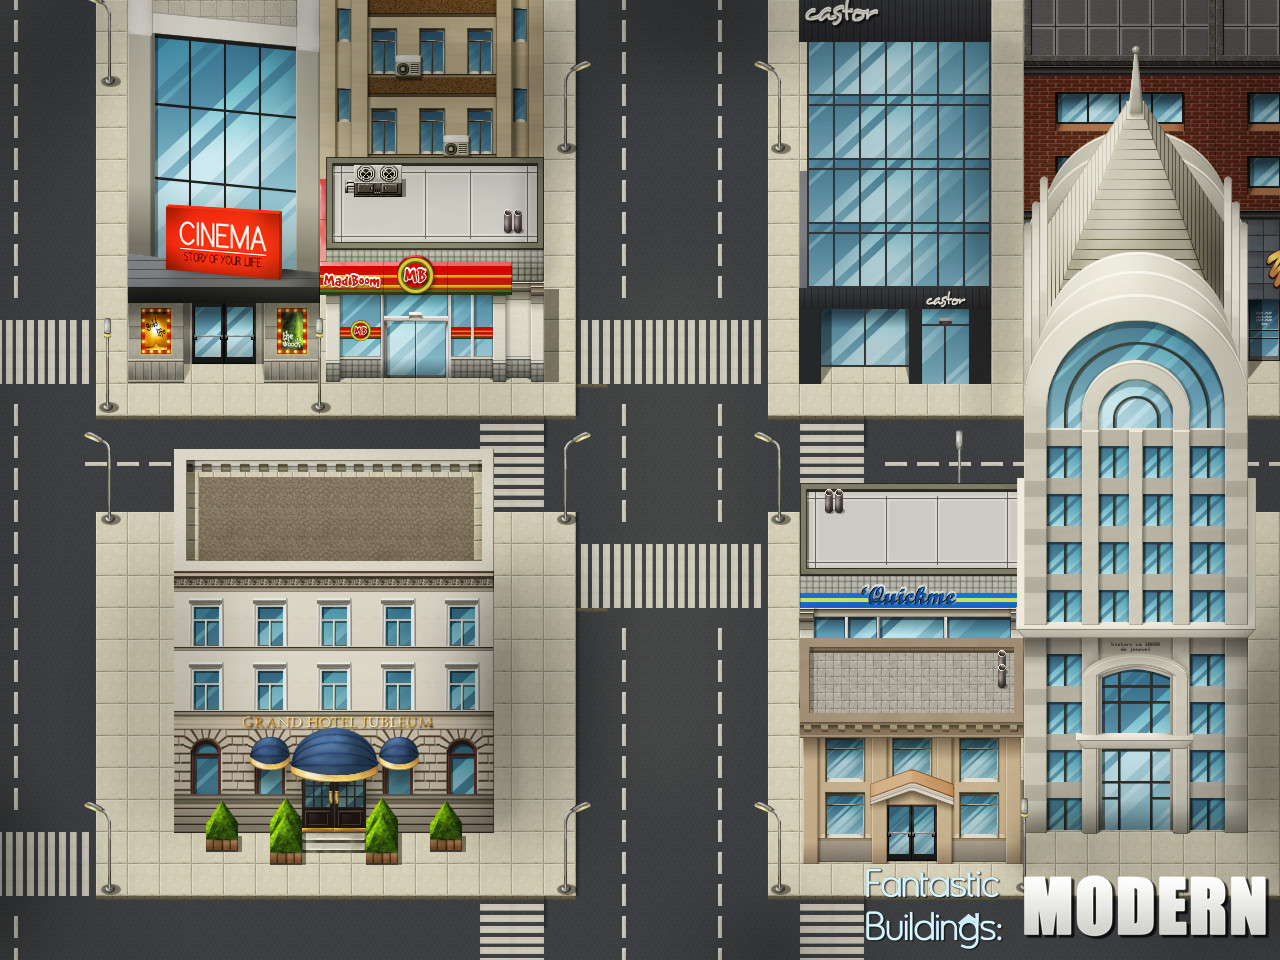 RPG Maker VX - Ace Fantastic Buildings: Modern DLC EU Steam CD Key 5.07$